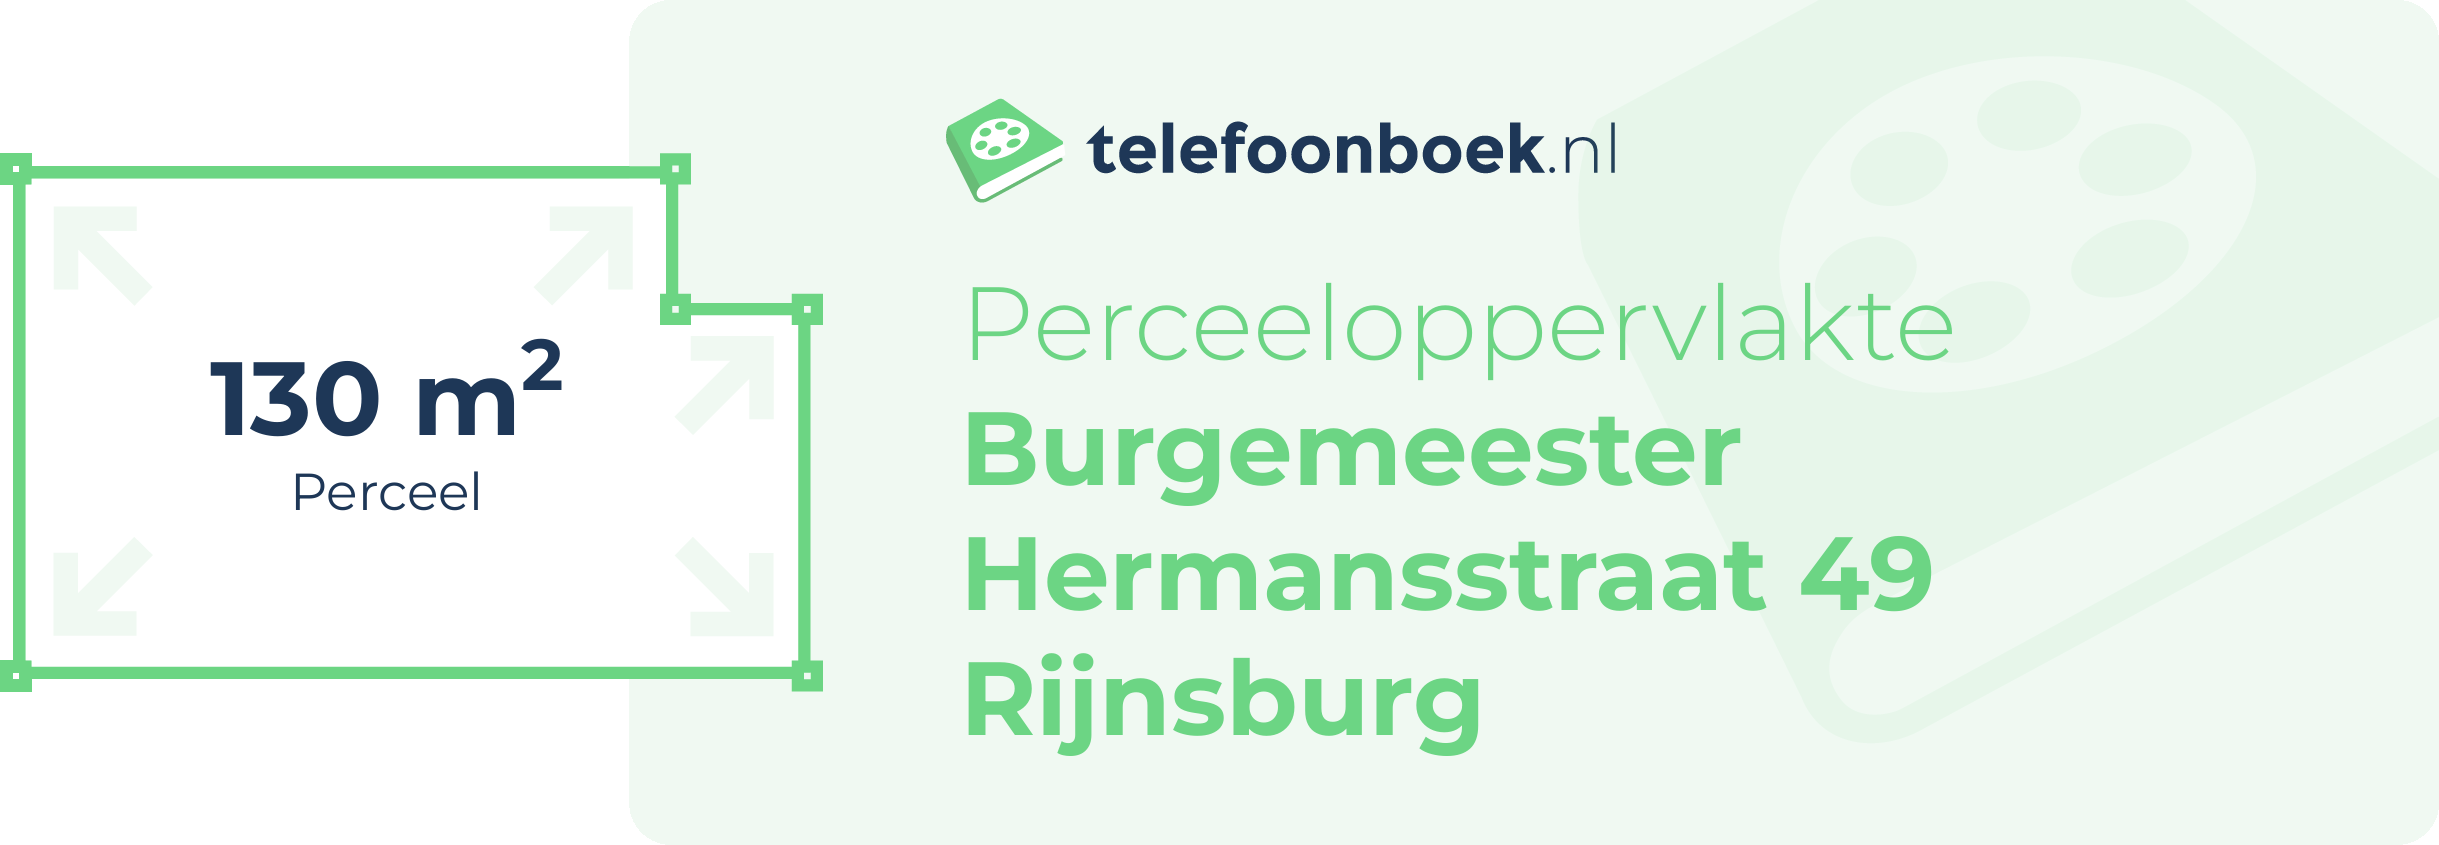 Perceeloppervlakte Burgemeester Hermansstraat 49 Rijnsburg